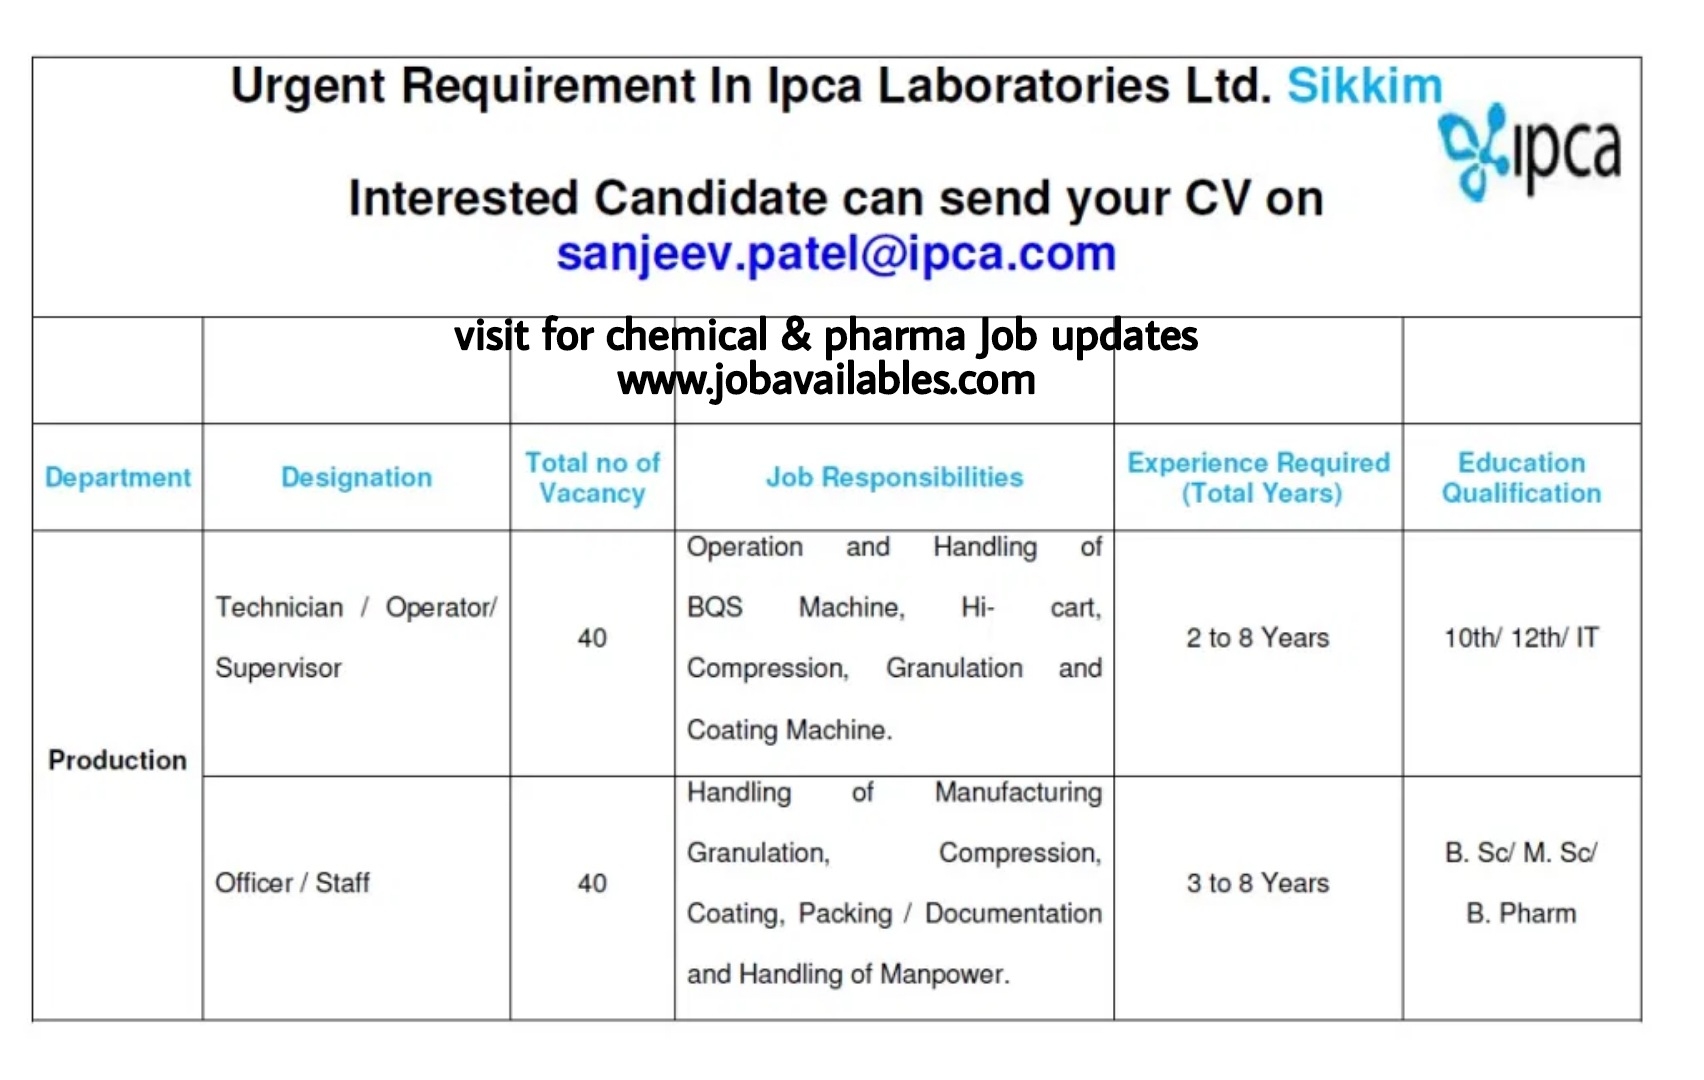 Job Availables, IPCA Laboratories Ltd Job Opening For Msc/ Bsc/ B.Pharma - Production dept